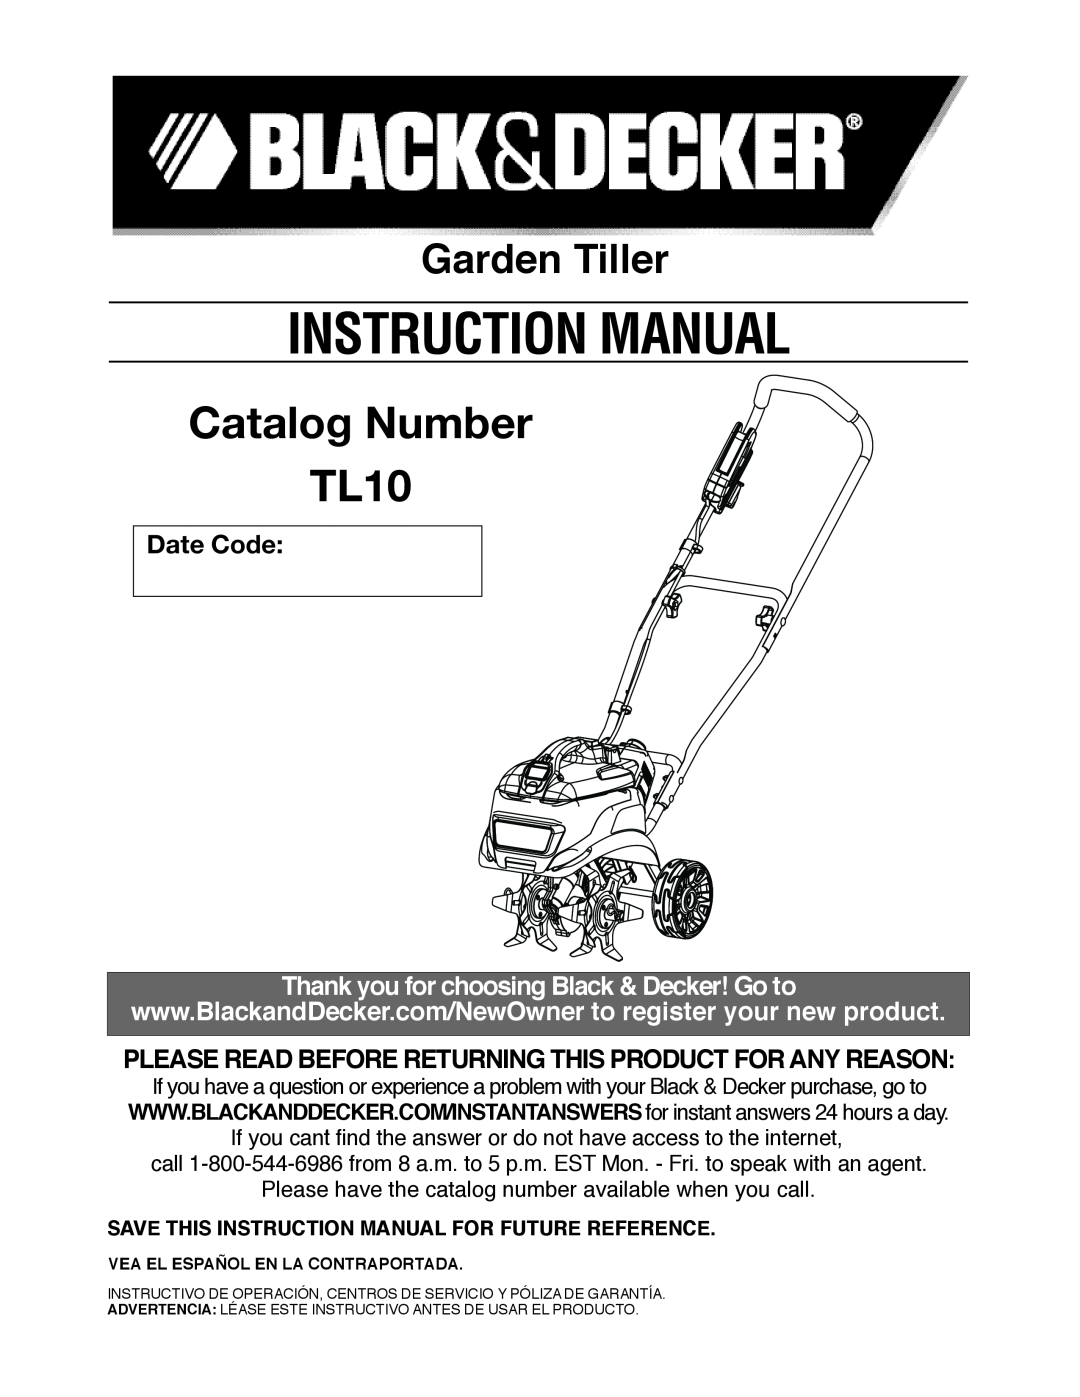 Black & Decker instruction manual Catalog Number TL10, Garden Tiller, Thank you for choosing Black & Decker! Go to 